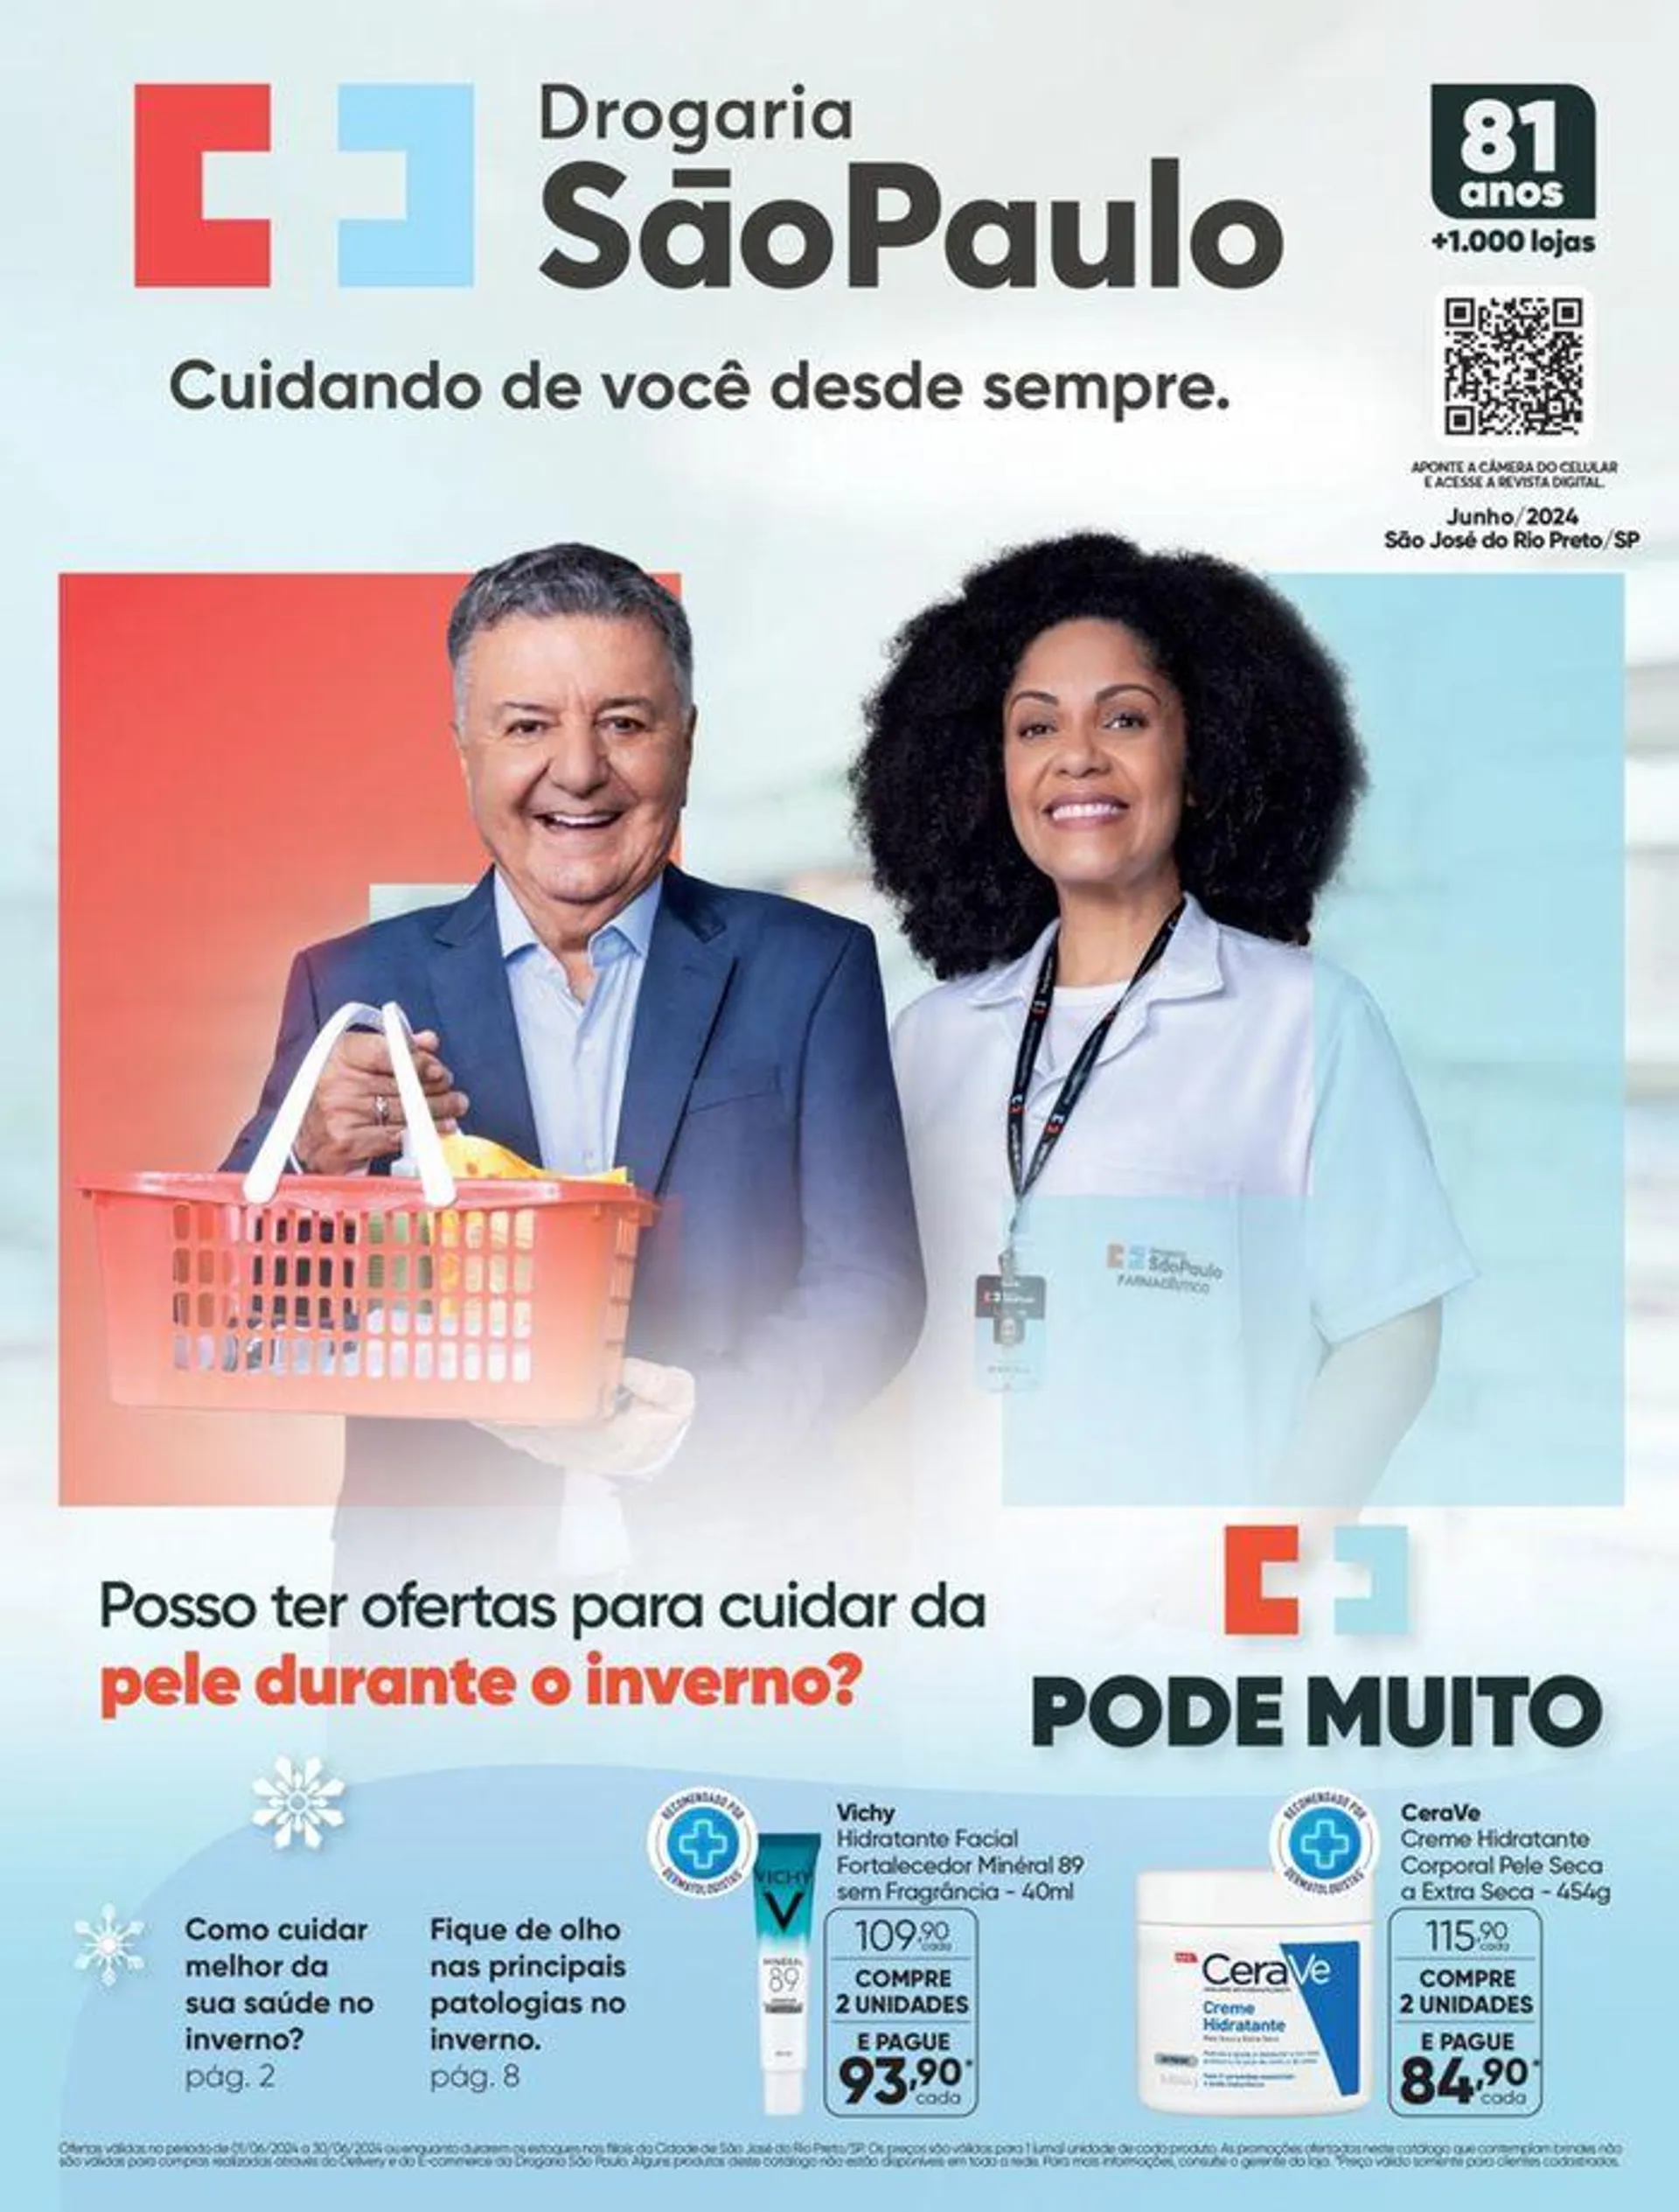 Oferta Drogaria São Paulo - 1